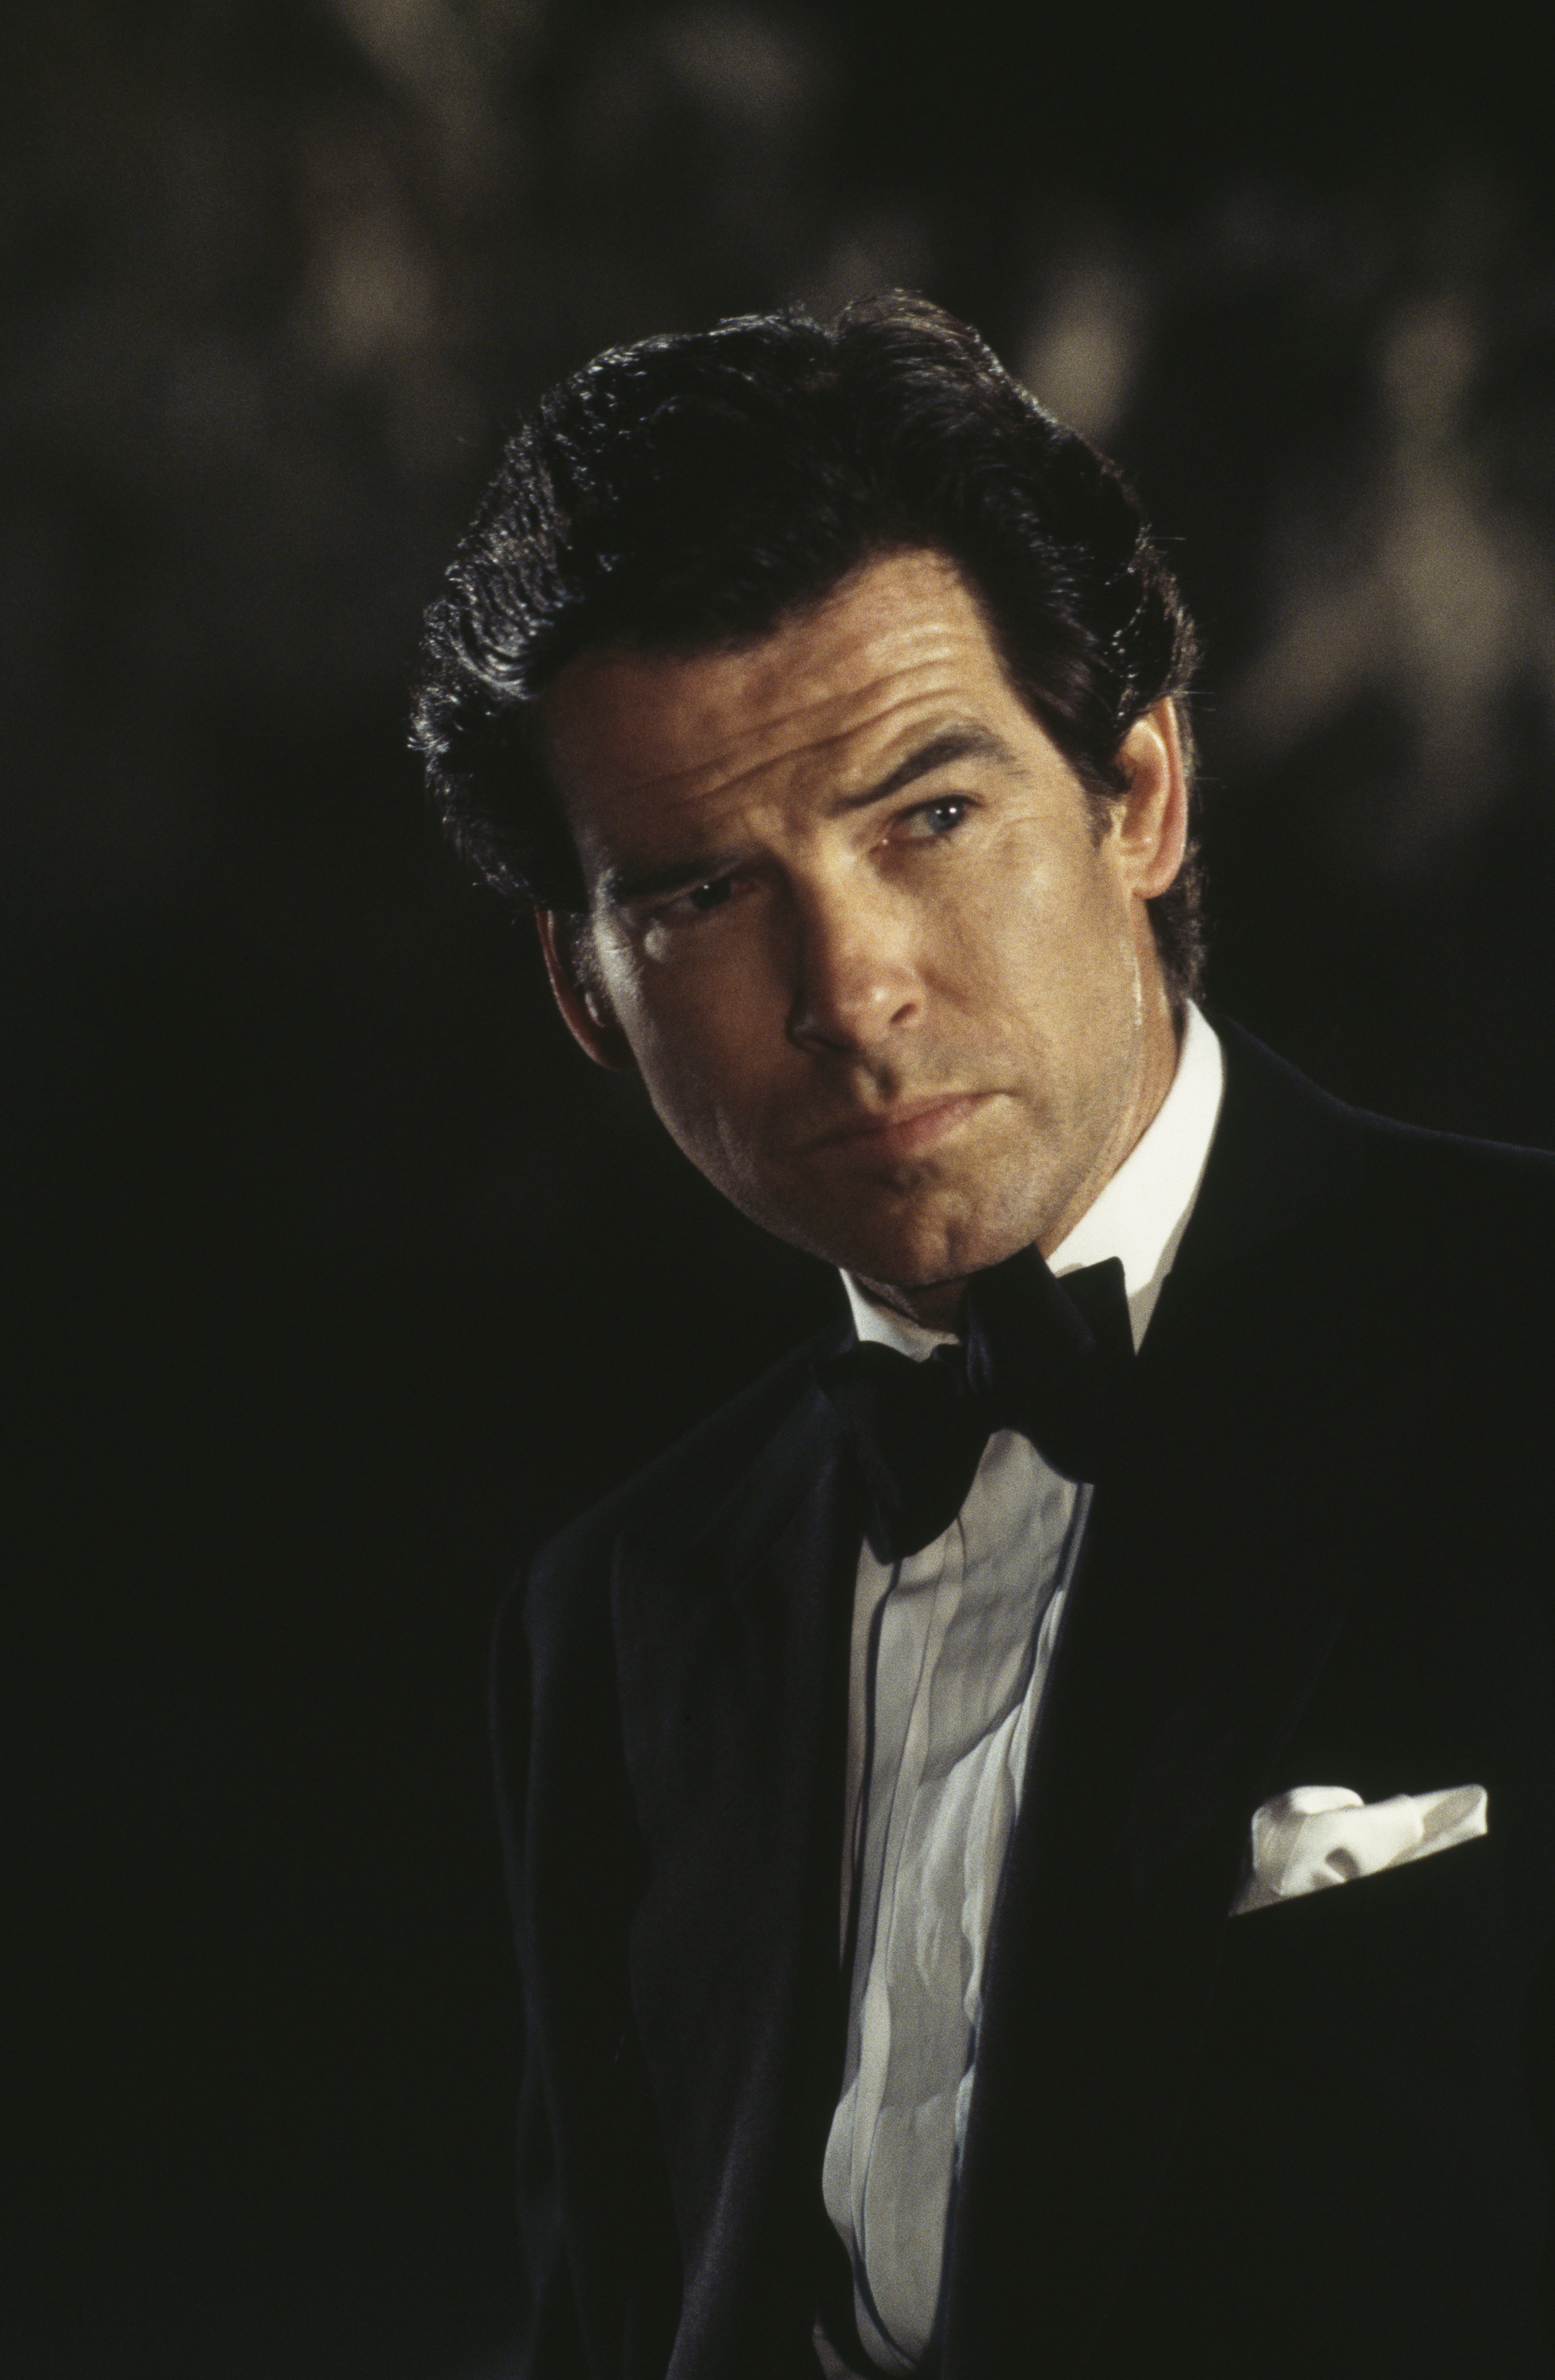 Pierce Brosnan stars as James Bond in the film "GoldenEye," in 1995 | Source: Getty Images